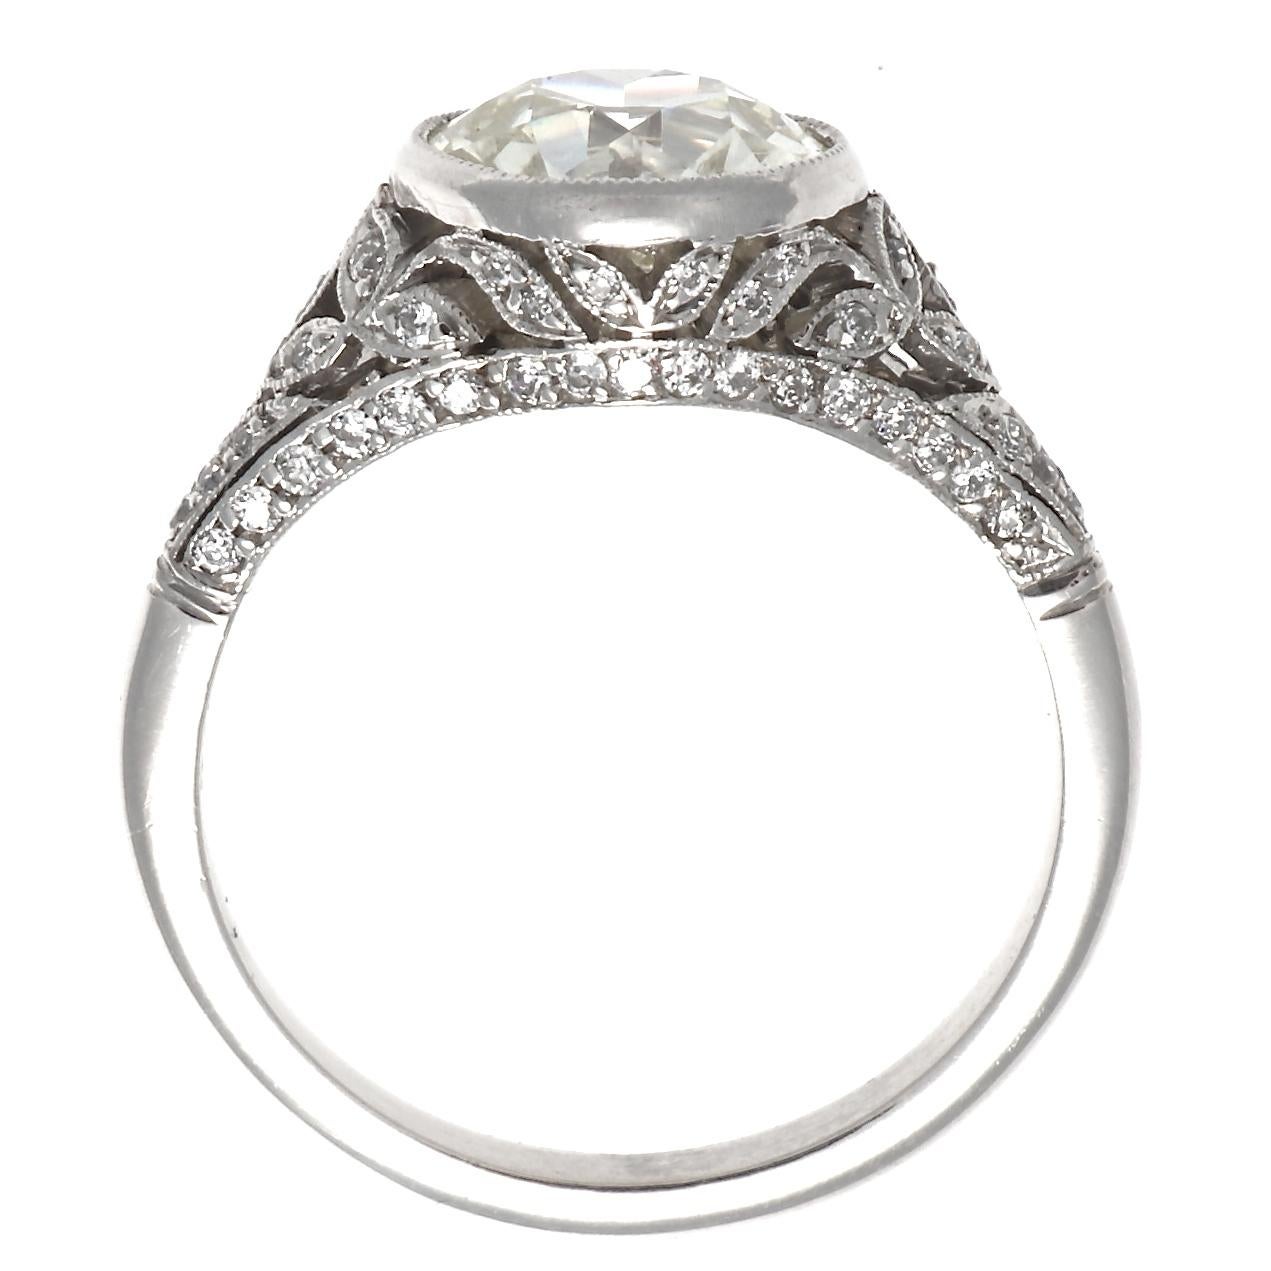 Women's Art Deco Inspired 2.32 Carat Platinum Diamond Engagement Ring